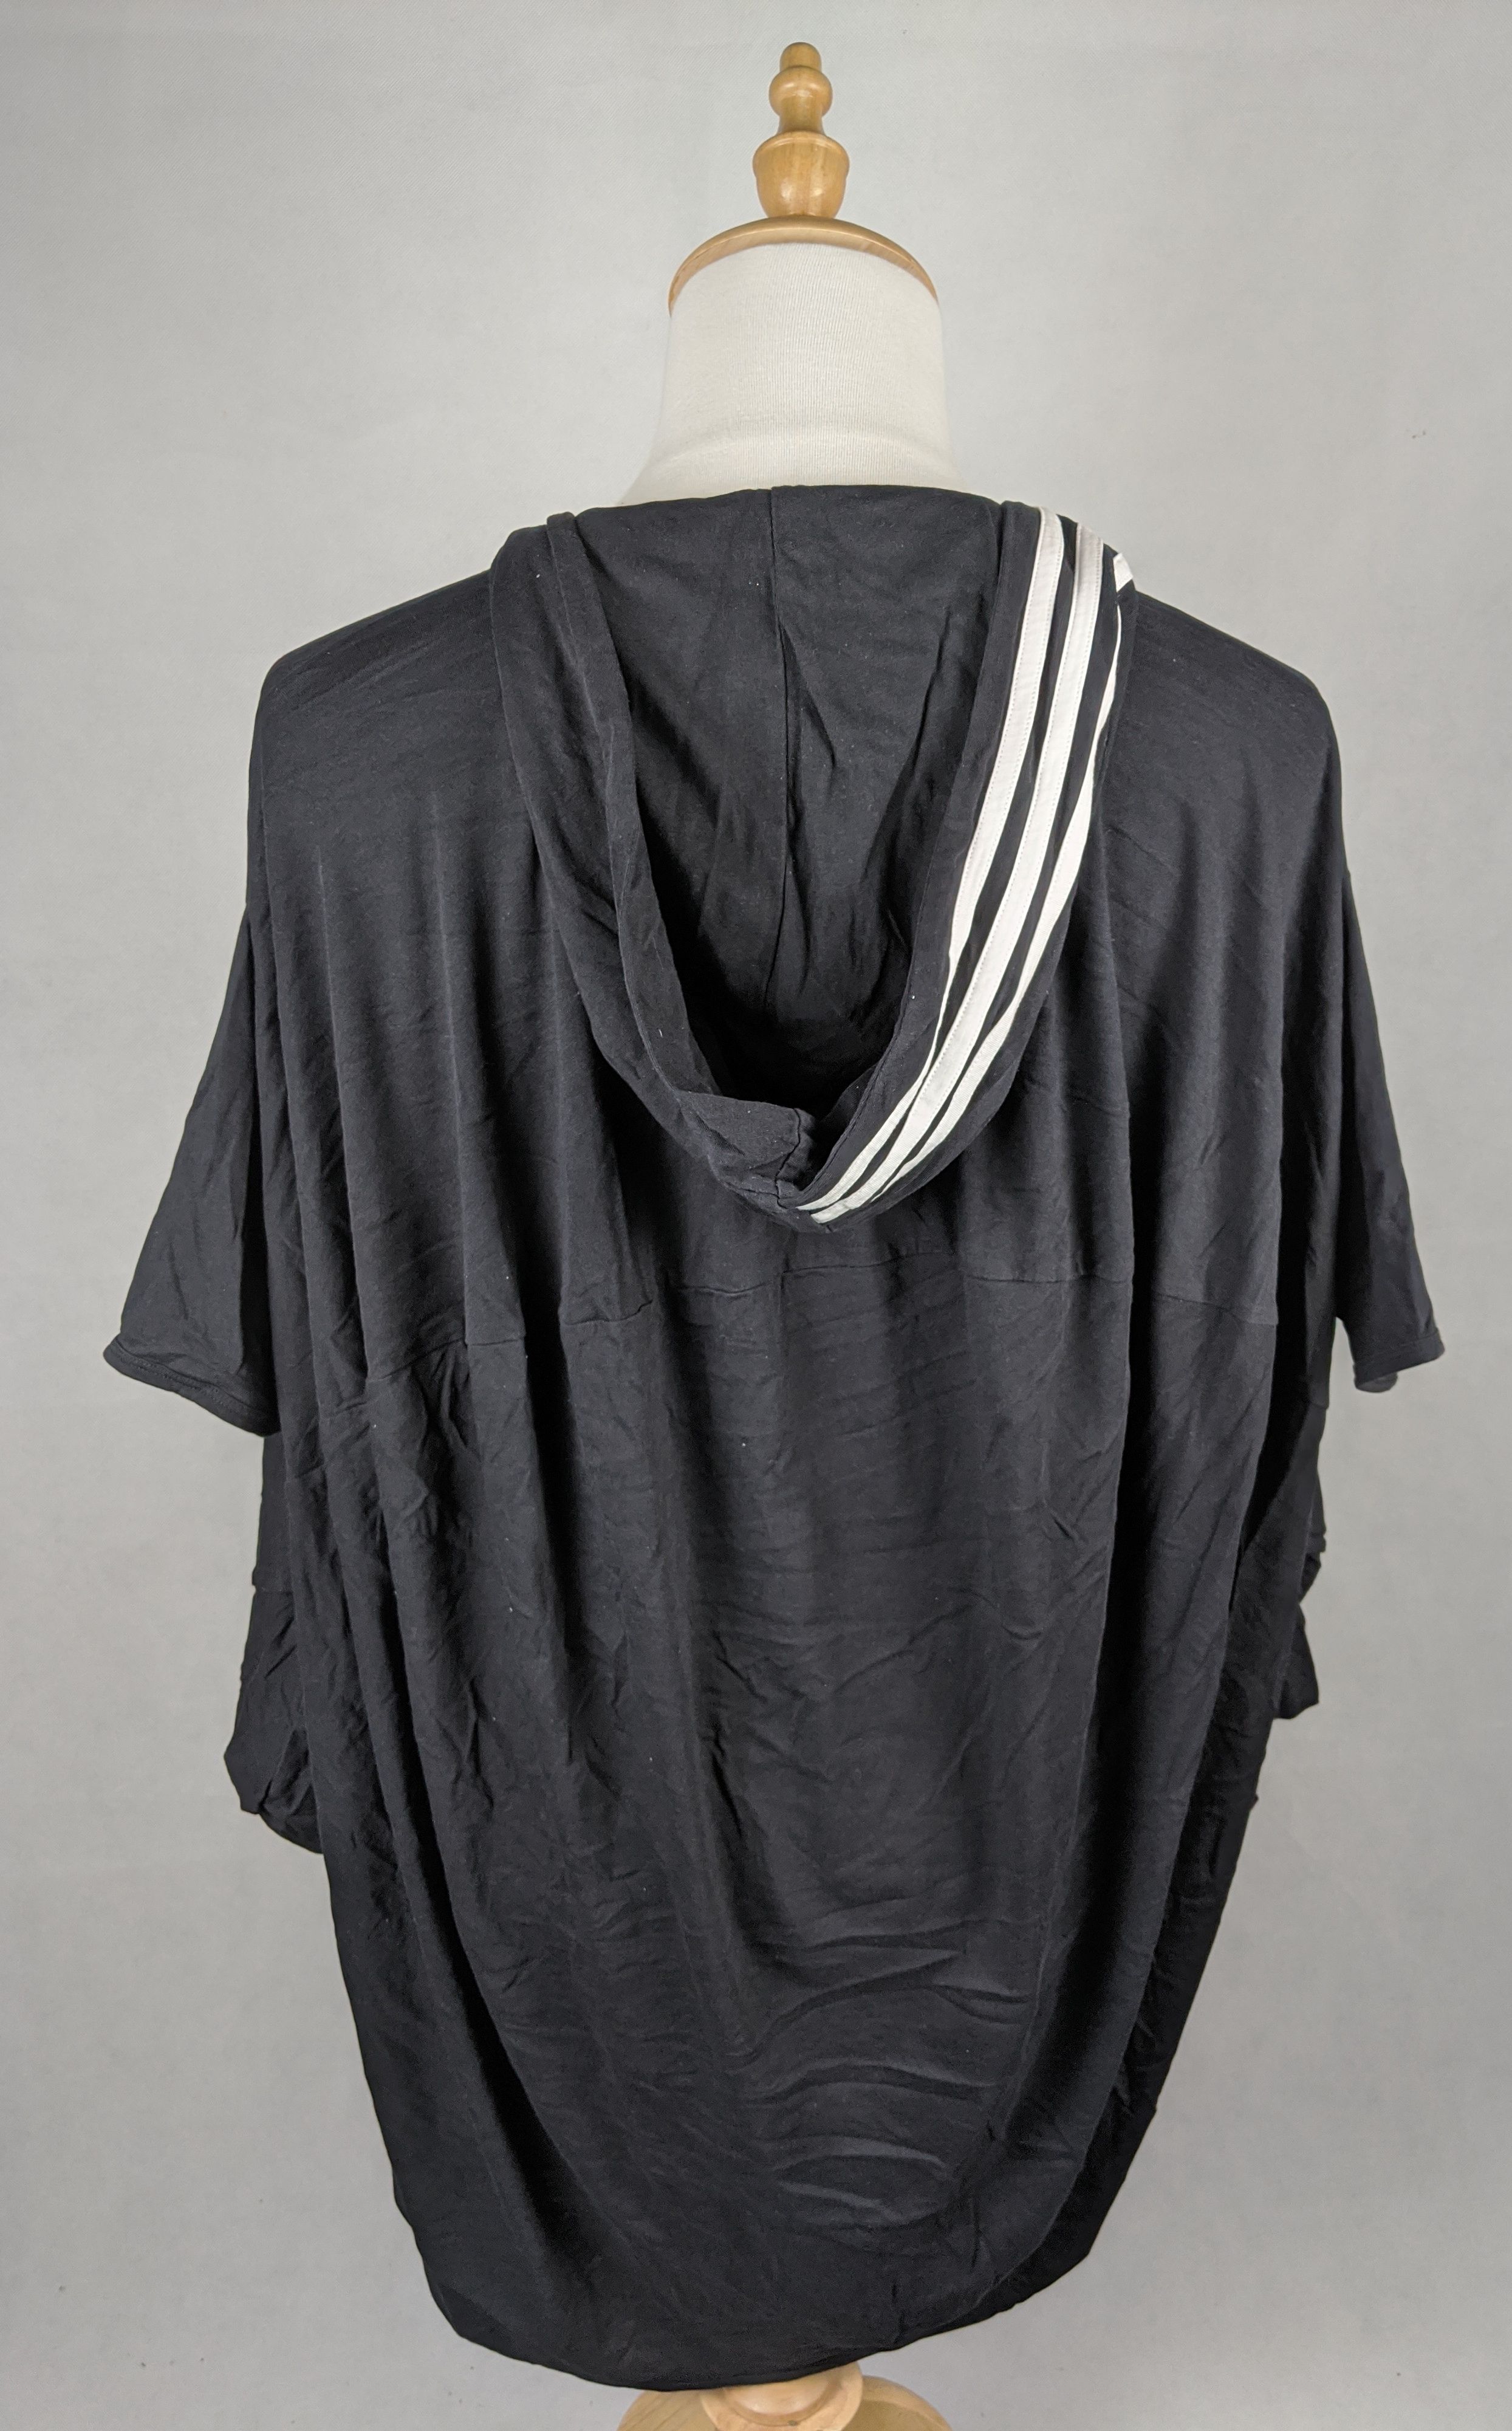 Adidas Y3 Yohji Yamamoto Adidas Cocoon Oversize Hoodie Sweater Size US XL / EU 56 / 4 - 2 Preview